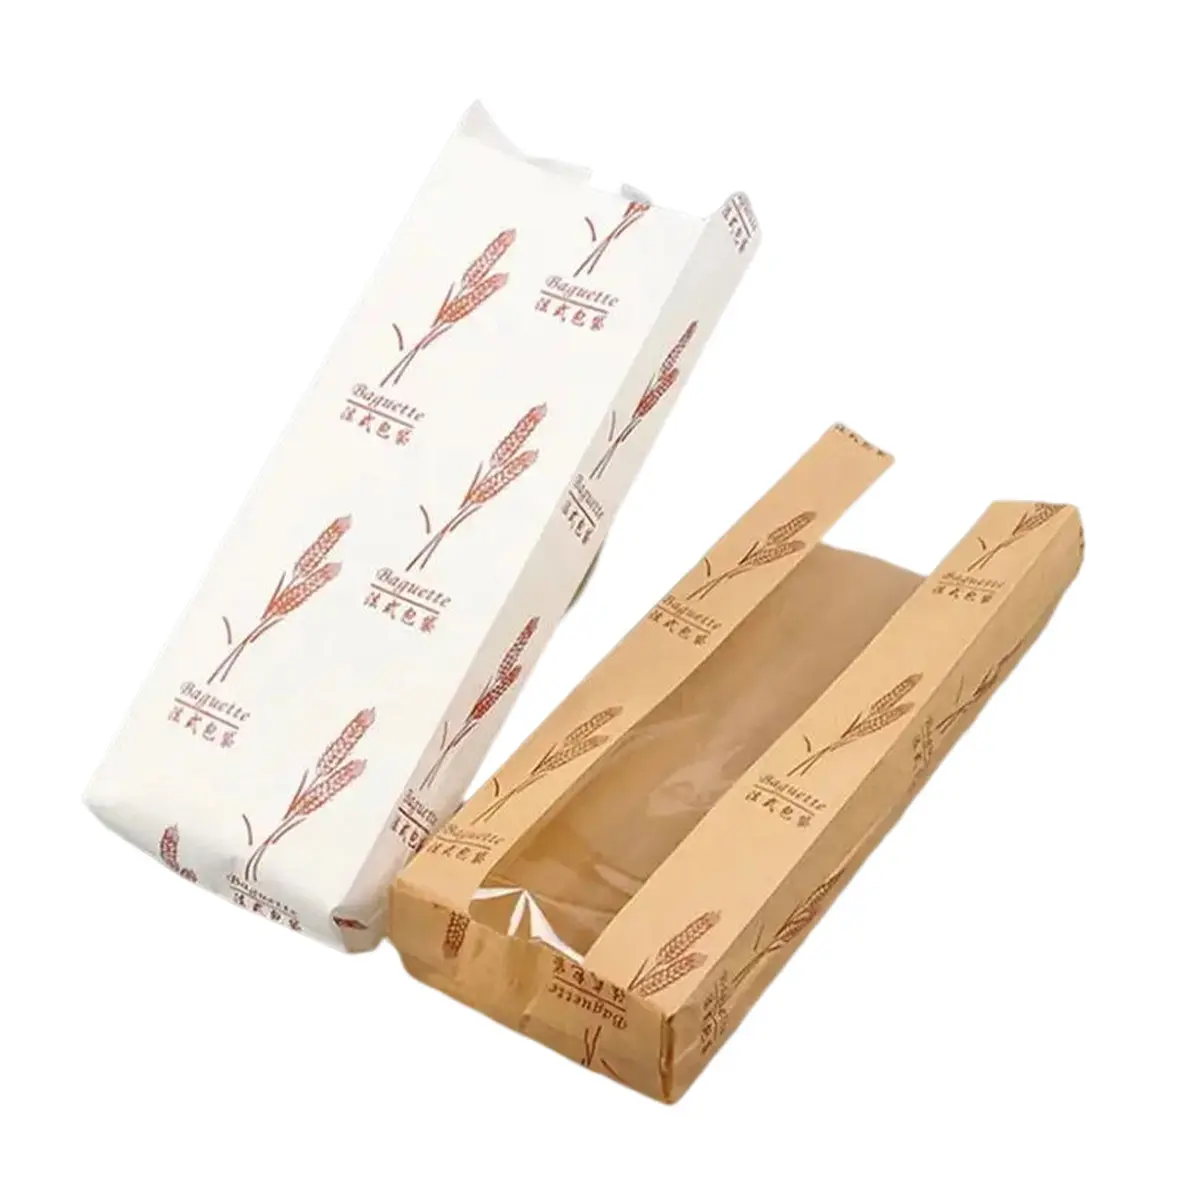 Customised printed french baguette bag brown Kraft perforated paper baguette bread bag